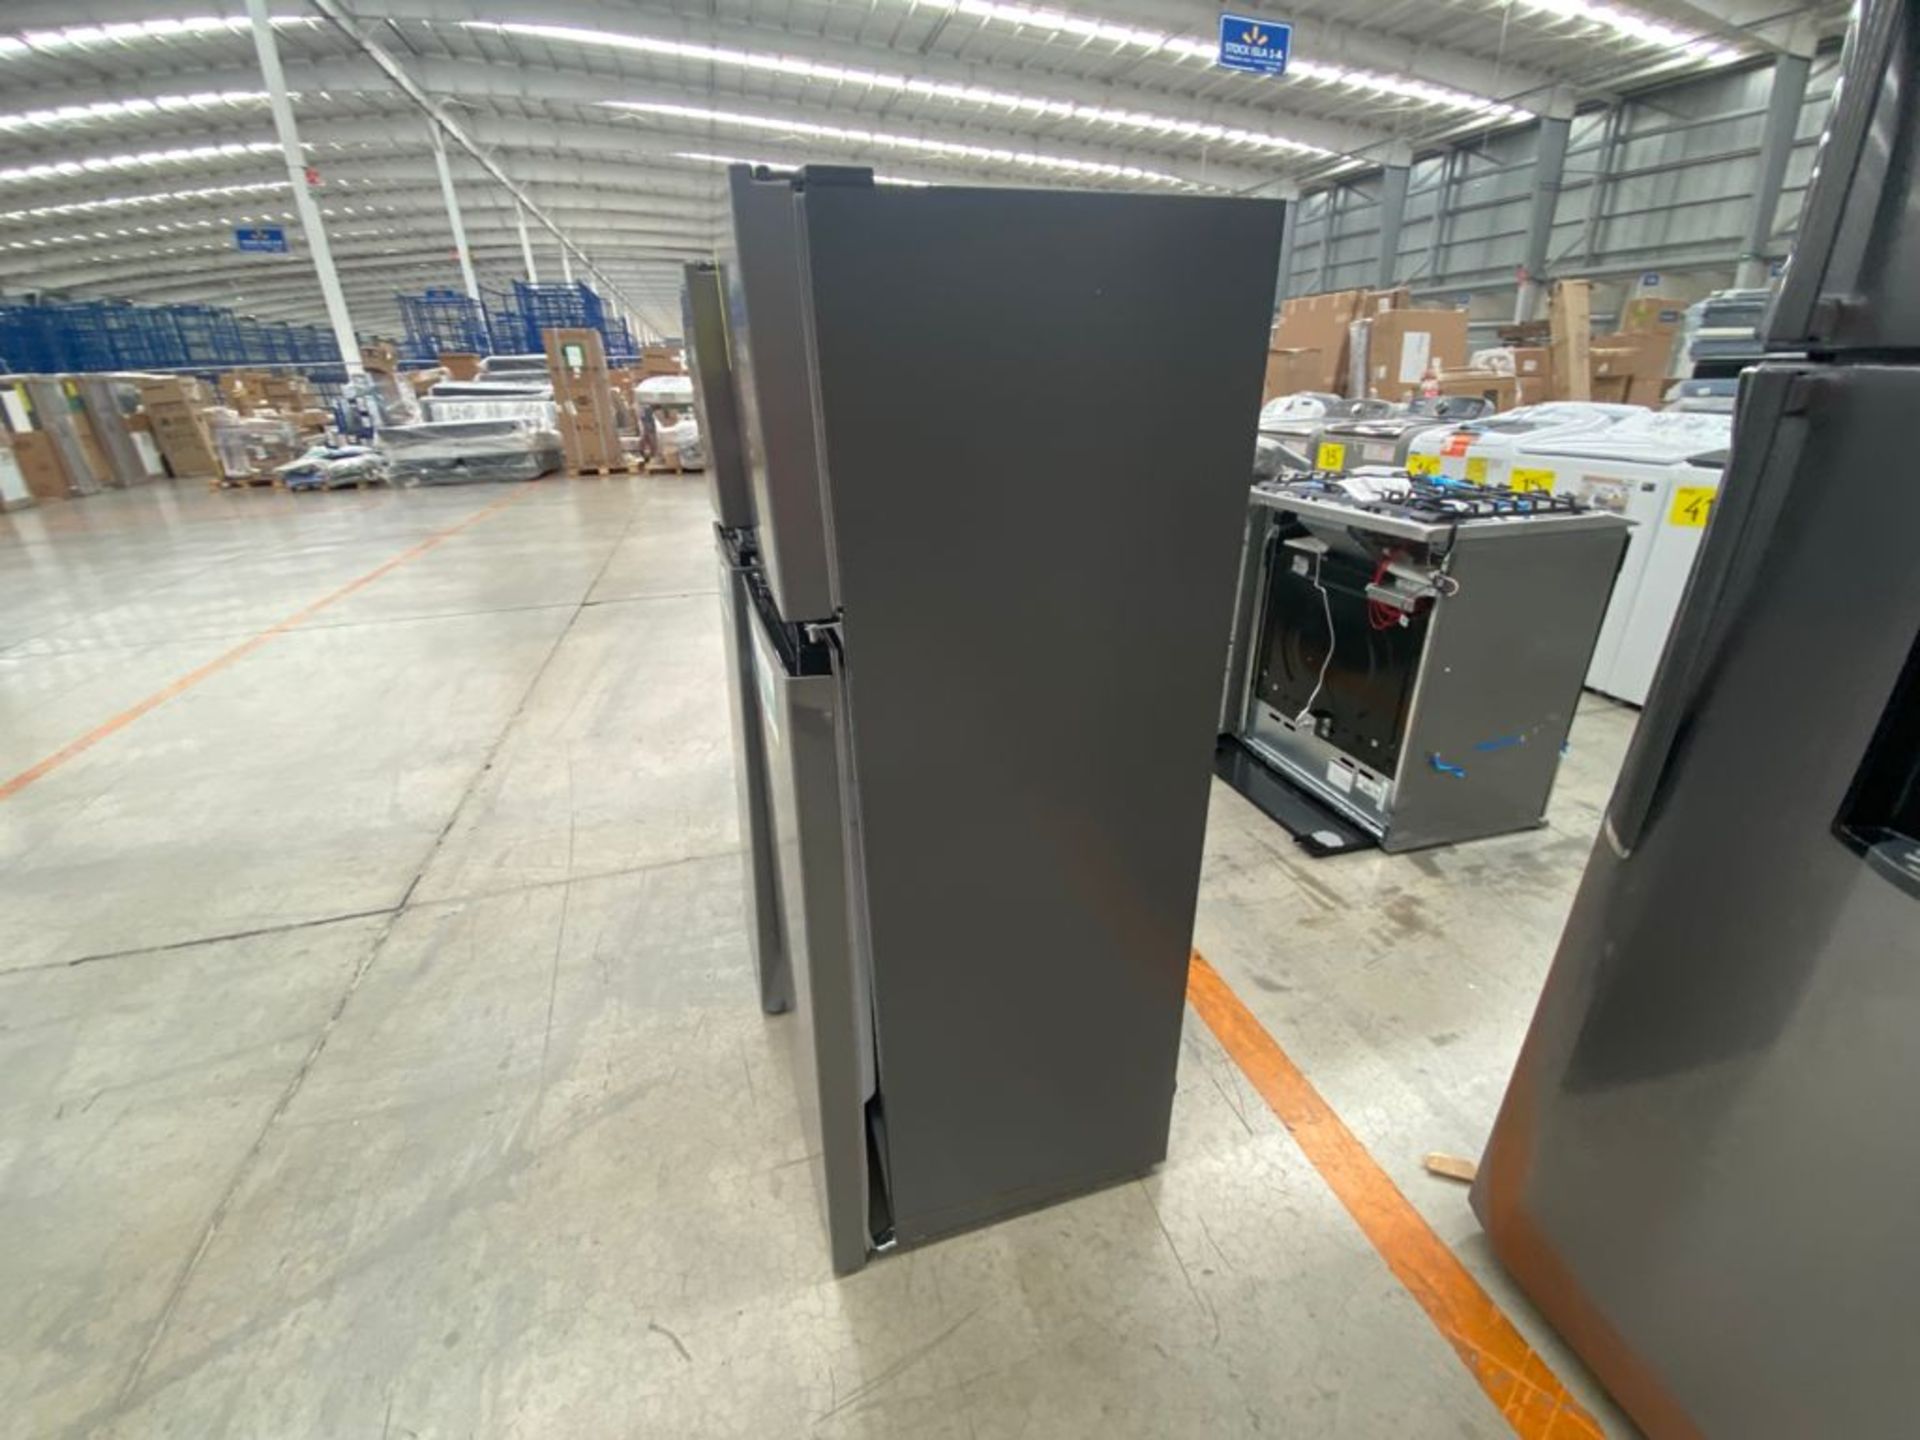 2 Refrigeradores marca Hisense color gris modelo RT80D6AWX - Image 6 of 28